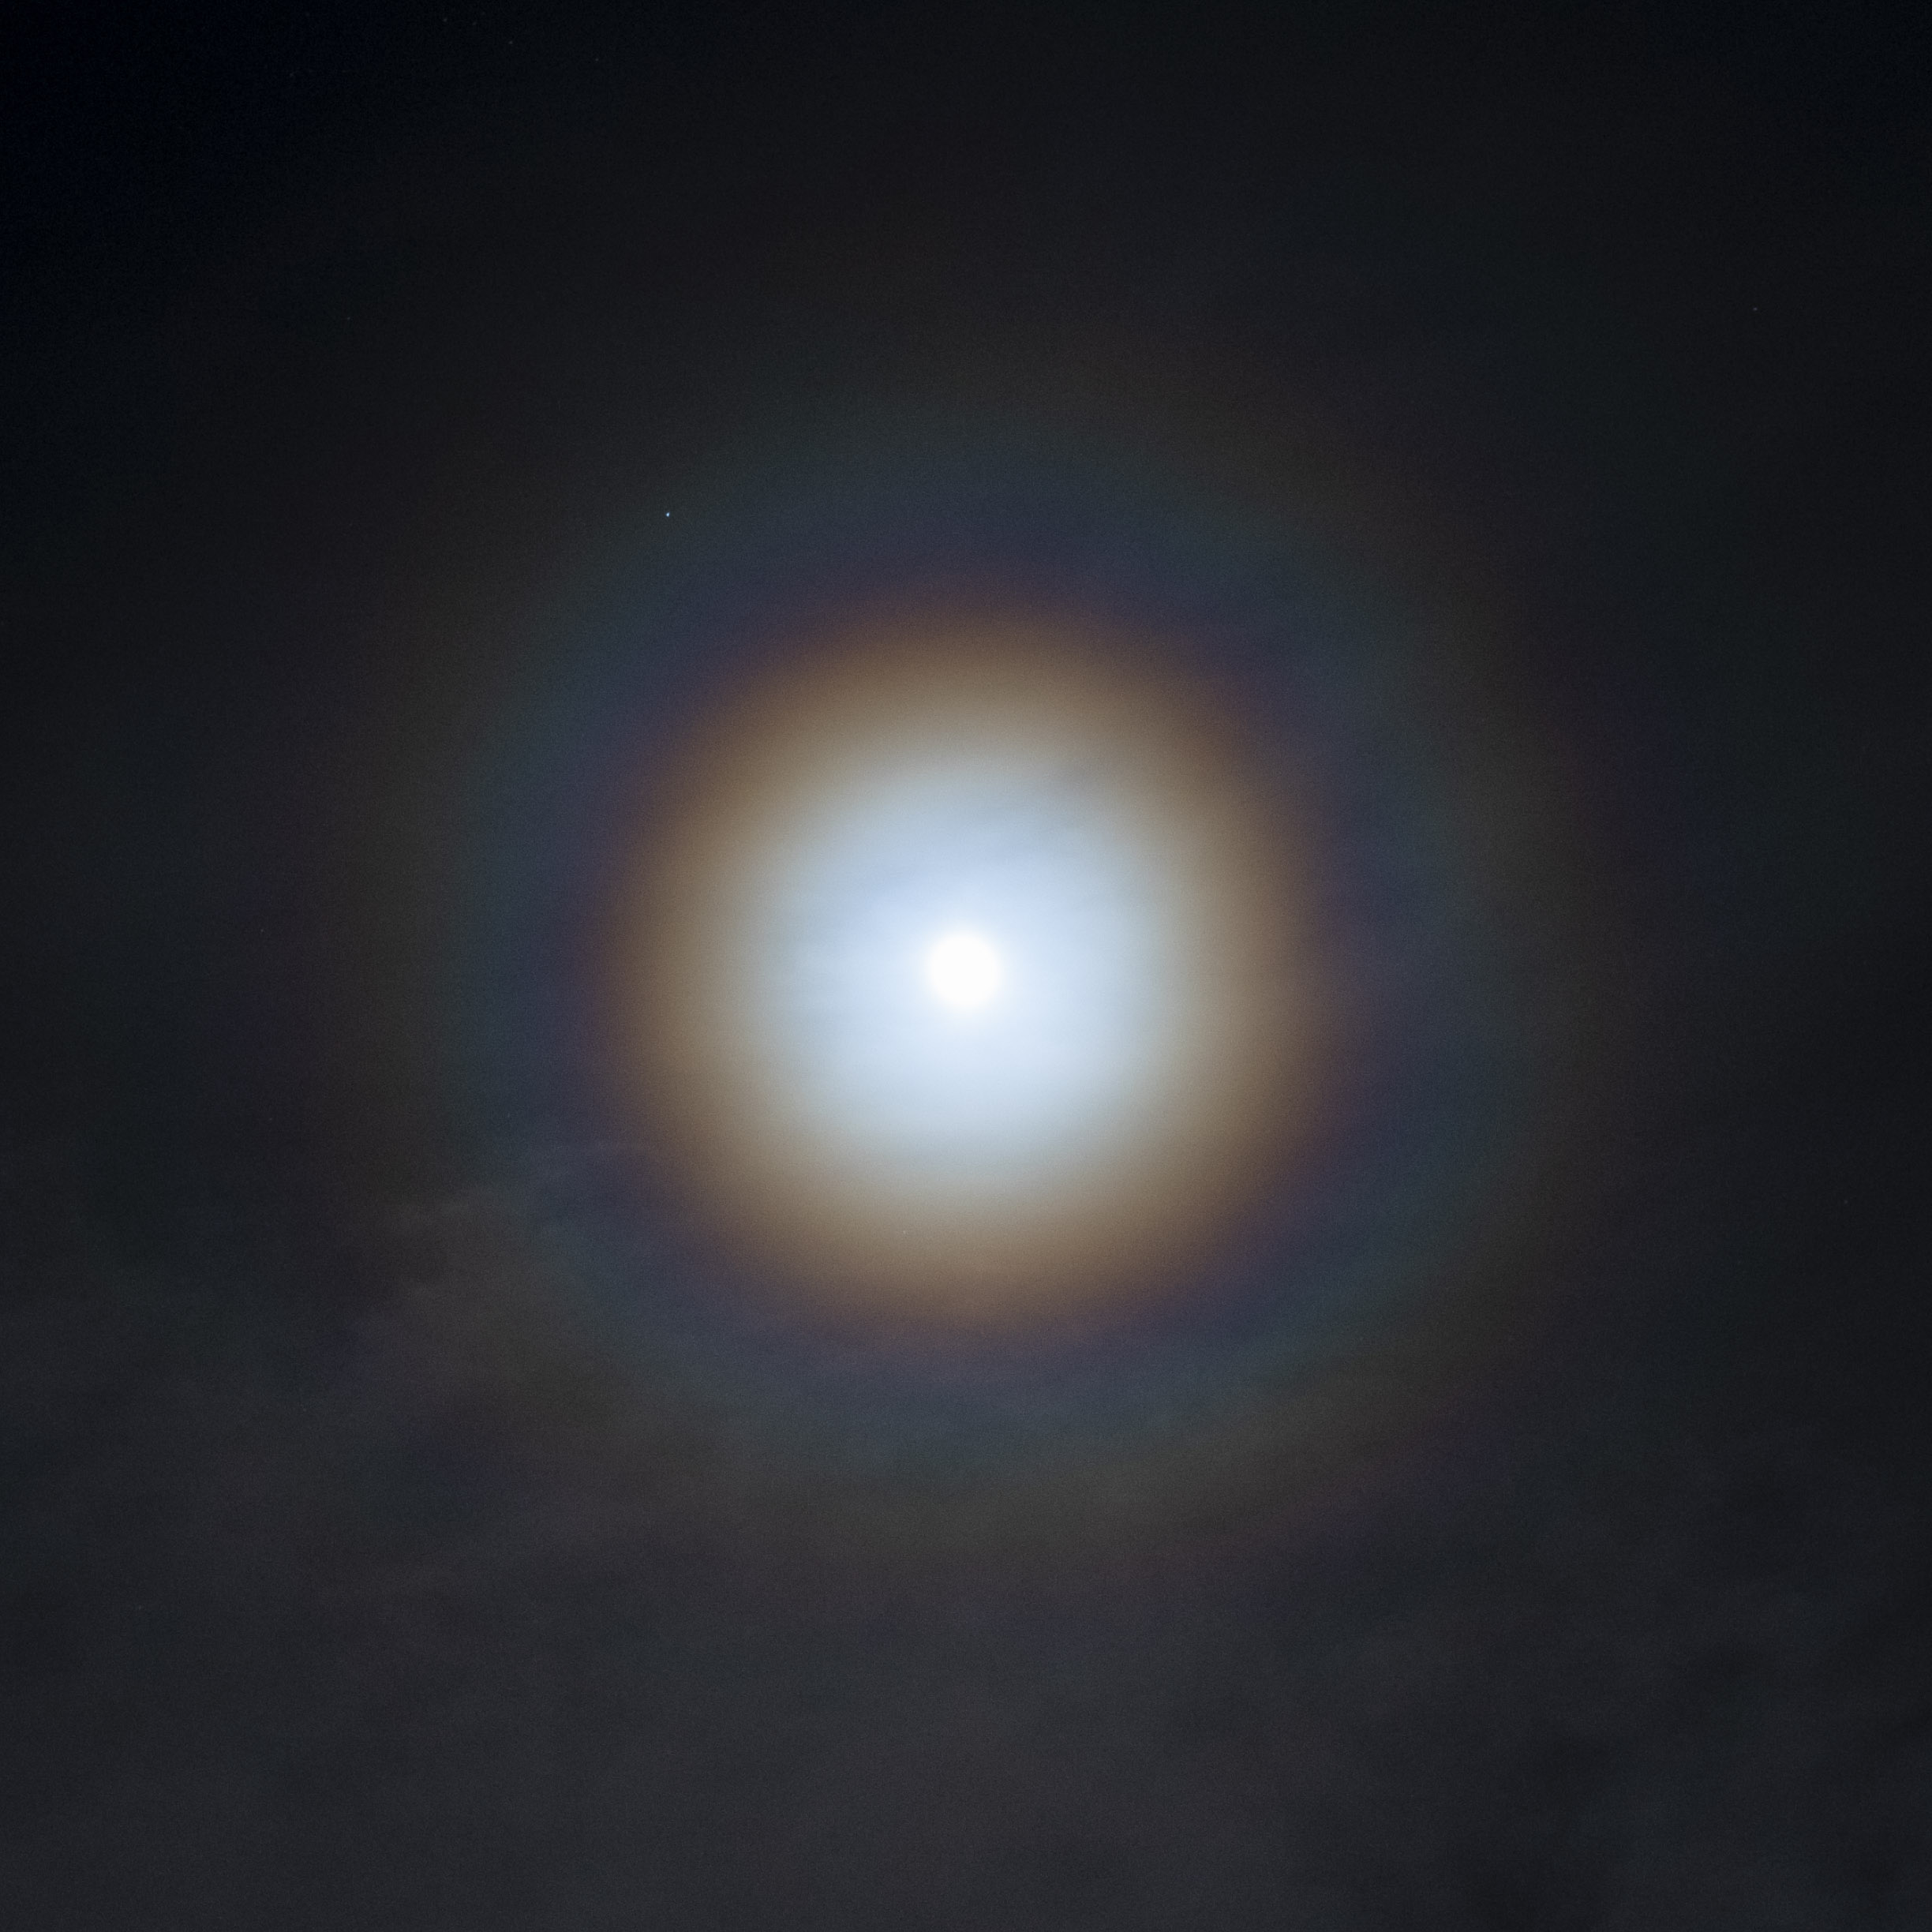 File:Winter halo around the moon.jpg - Wikimedia Commons